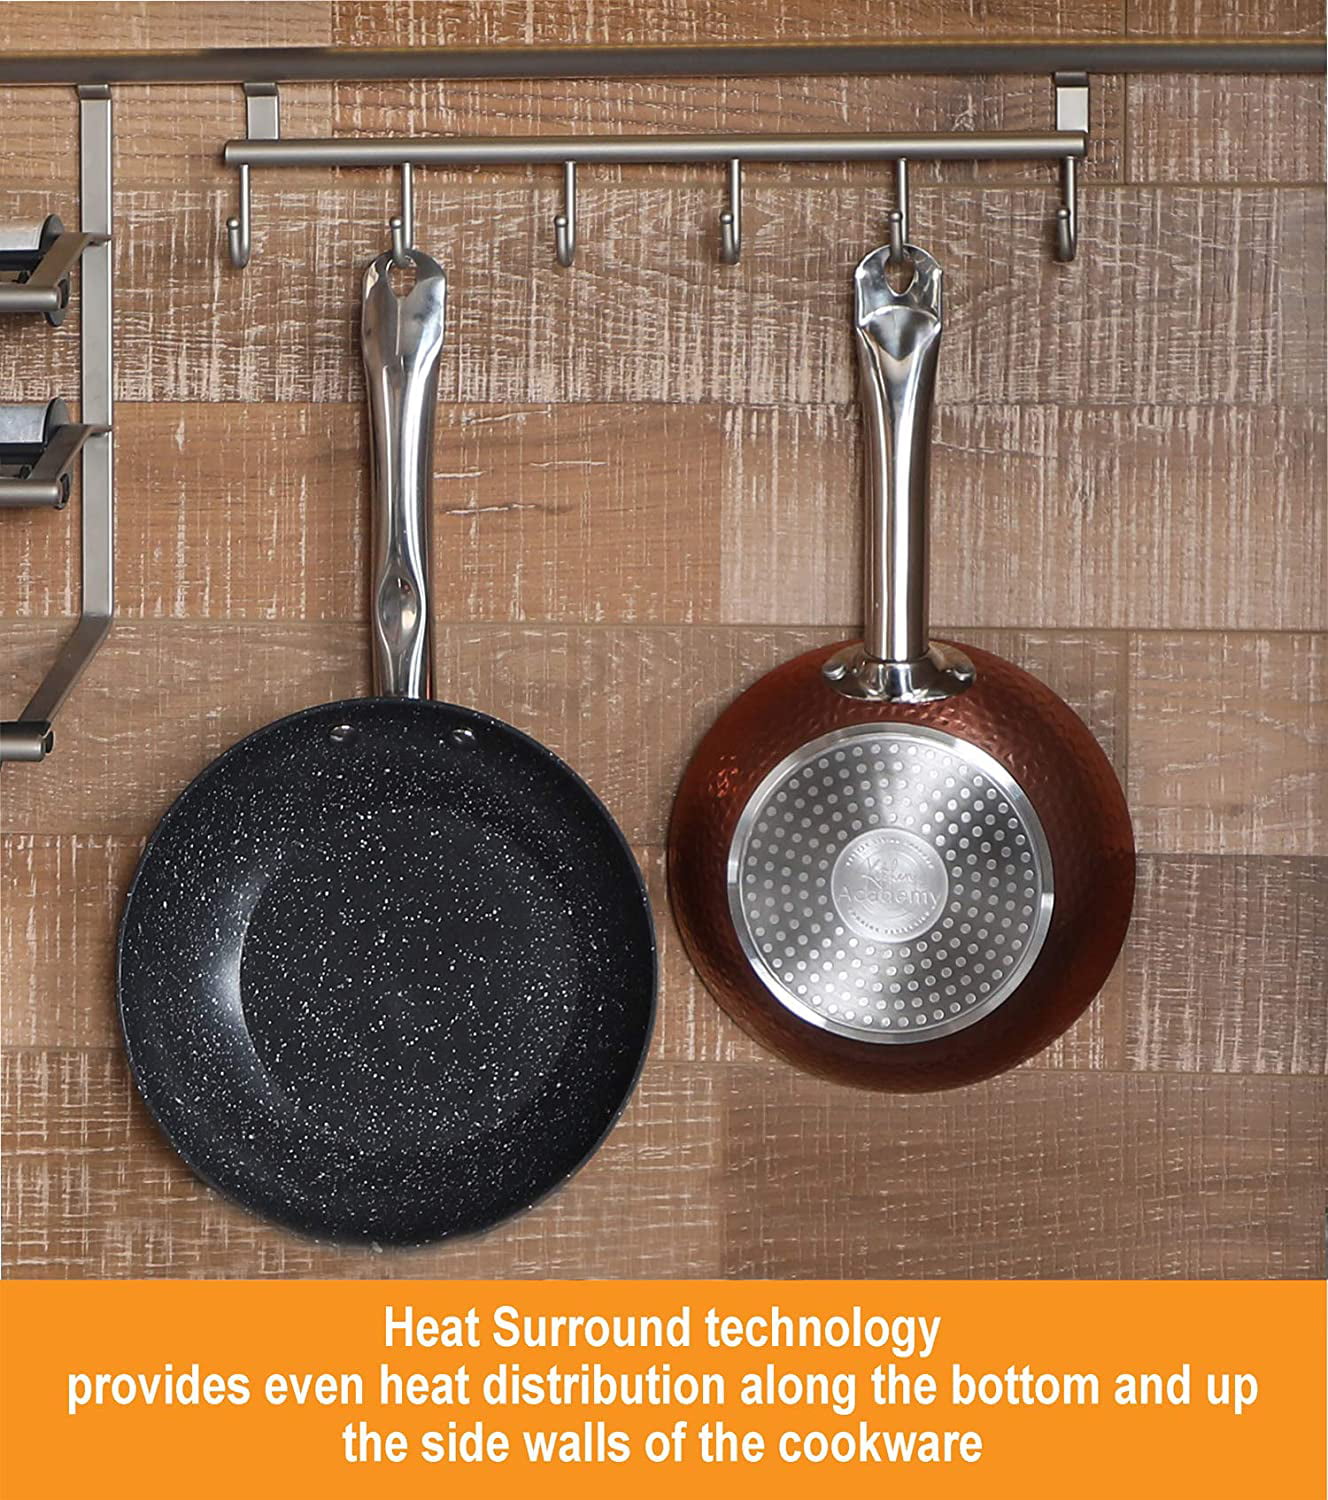 Stylish Hammered Finish Nonstick 15 Pieces Cookware Gift Set-Kitchen  Academy – AlphaMarts